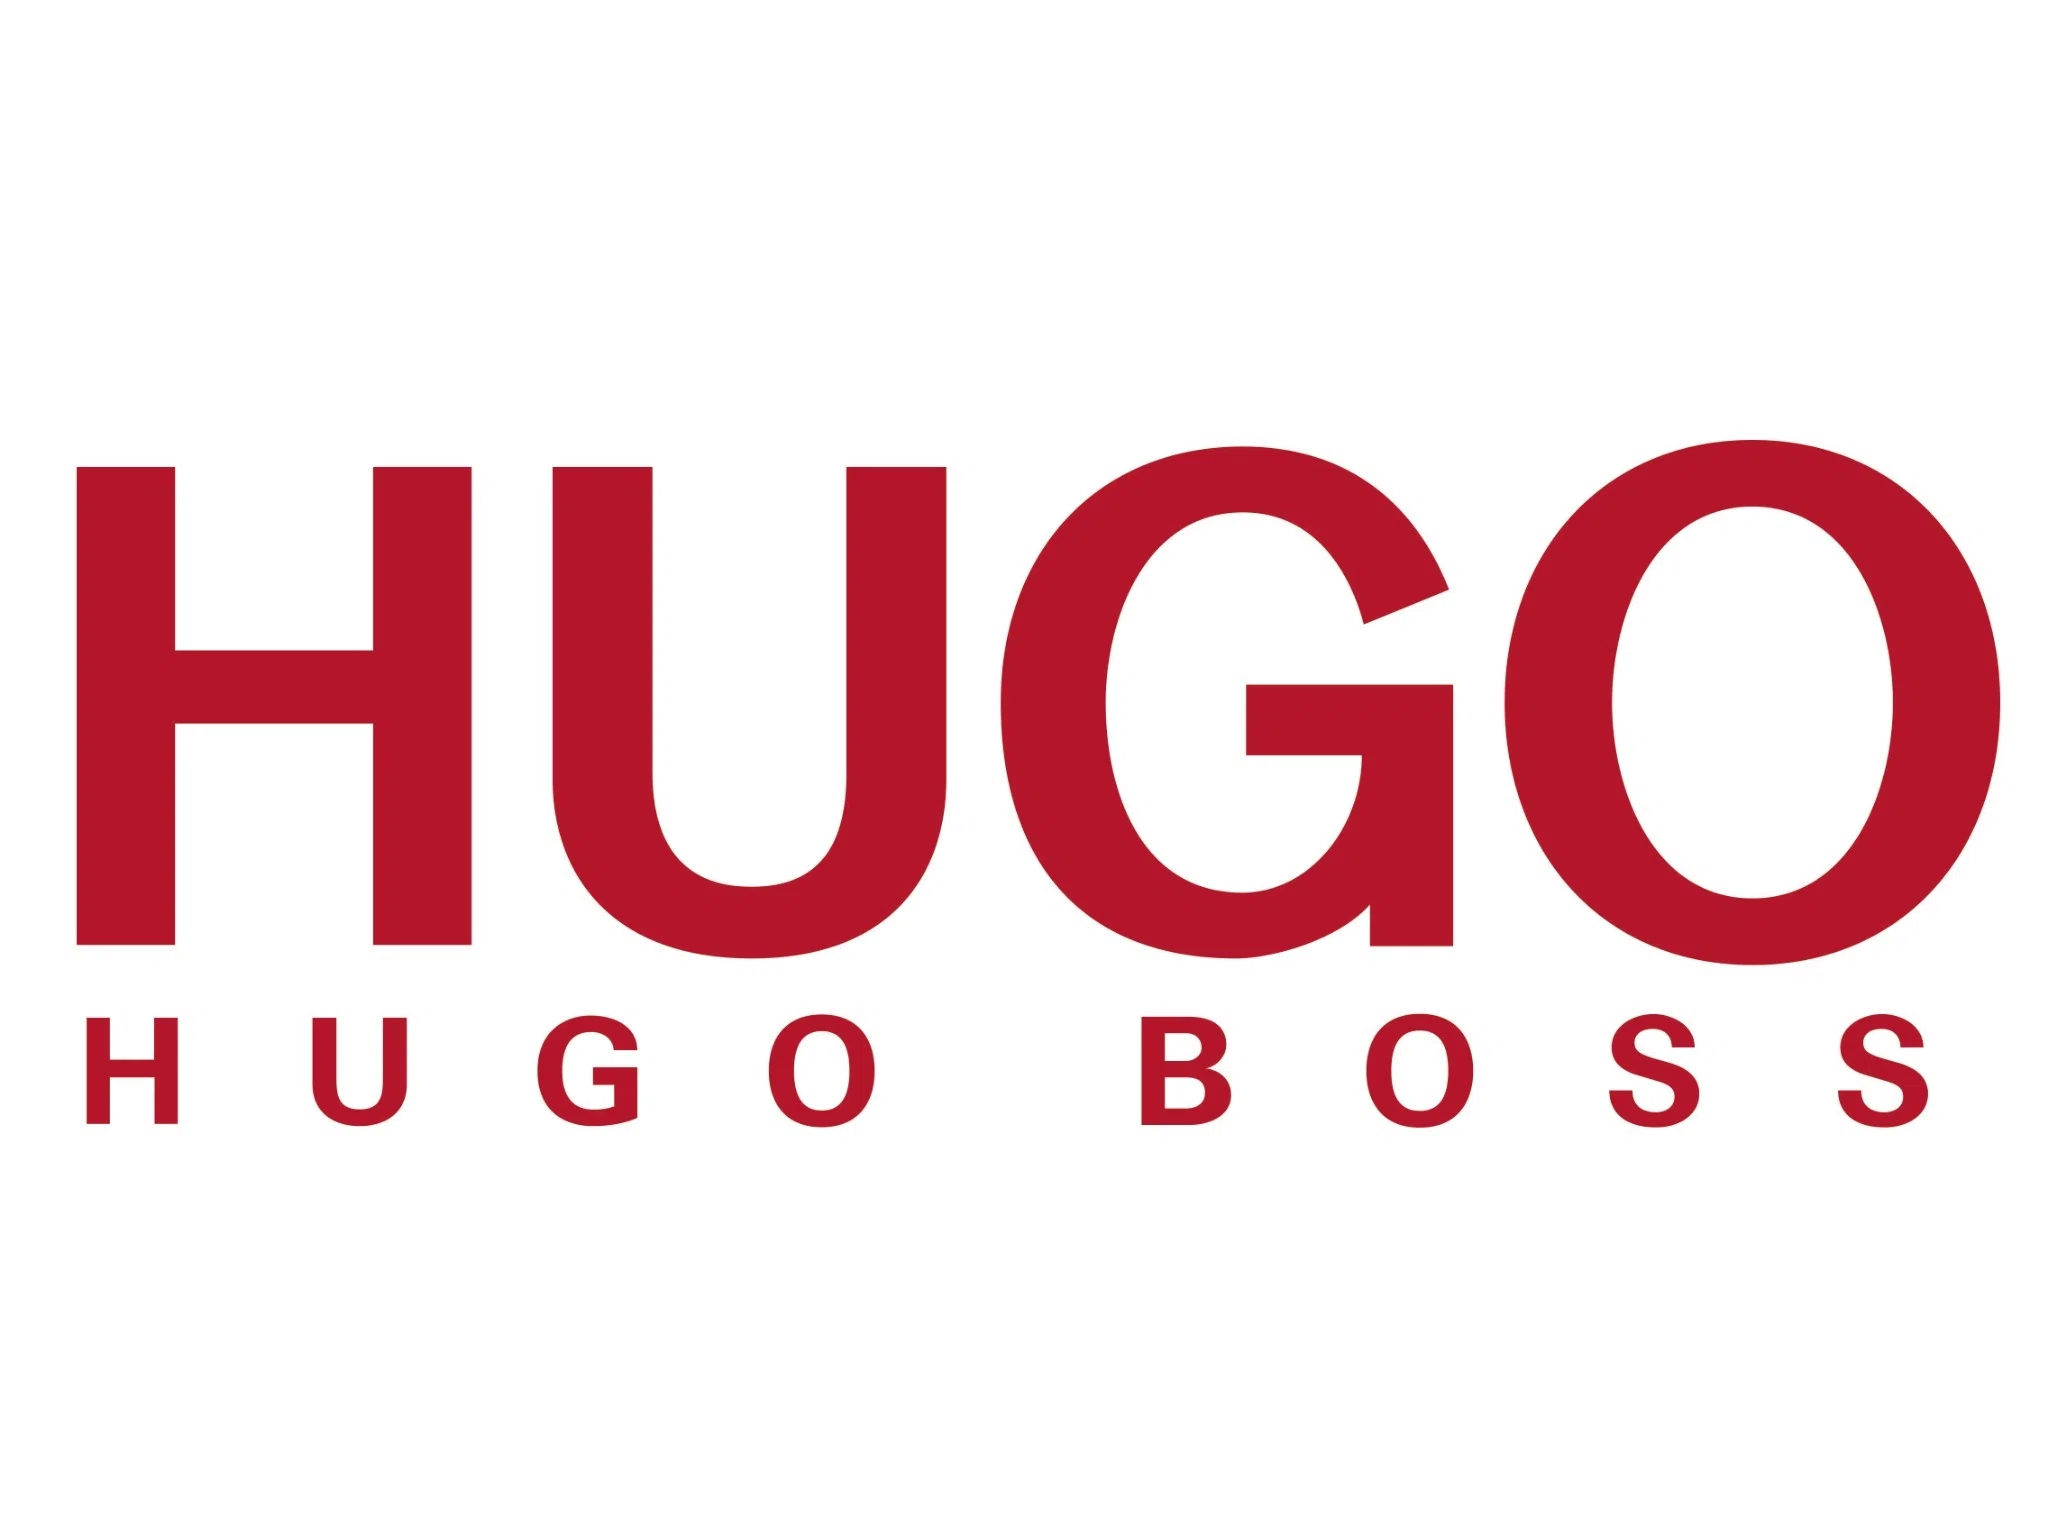 hugo boss in store coupon